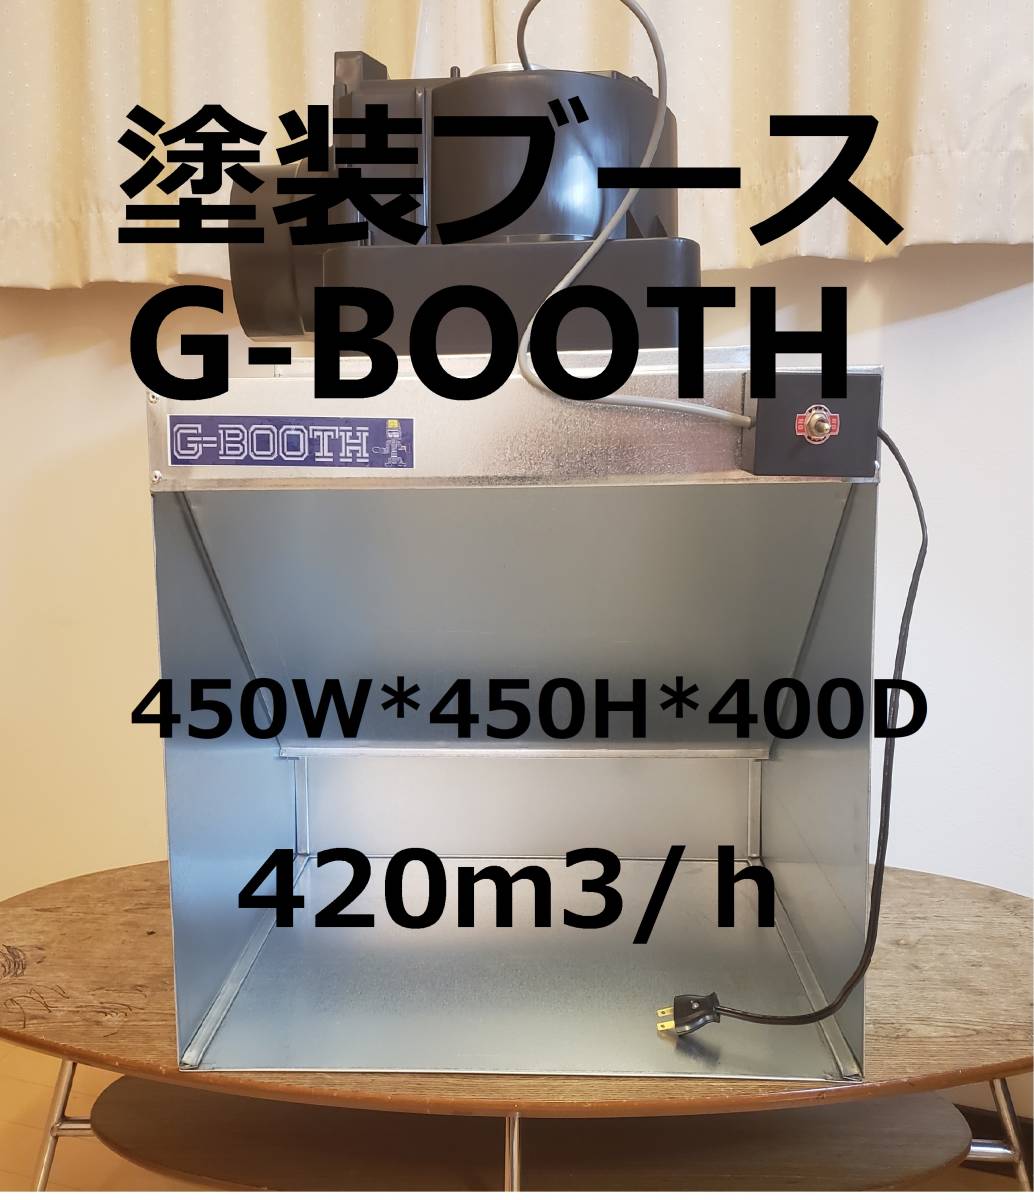 G-Booth静音高静圧塗装ブース 実用新案 風量500ｍ3/ｈセット一式-